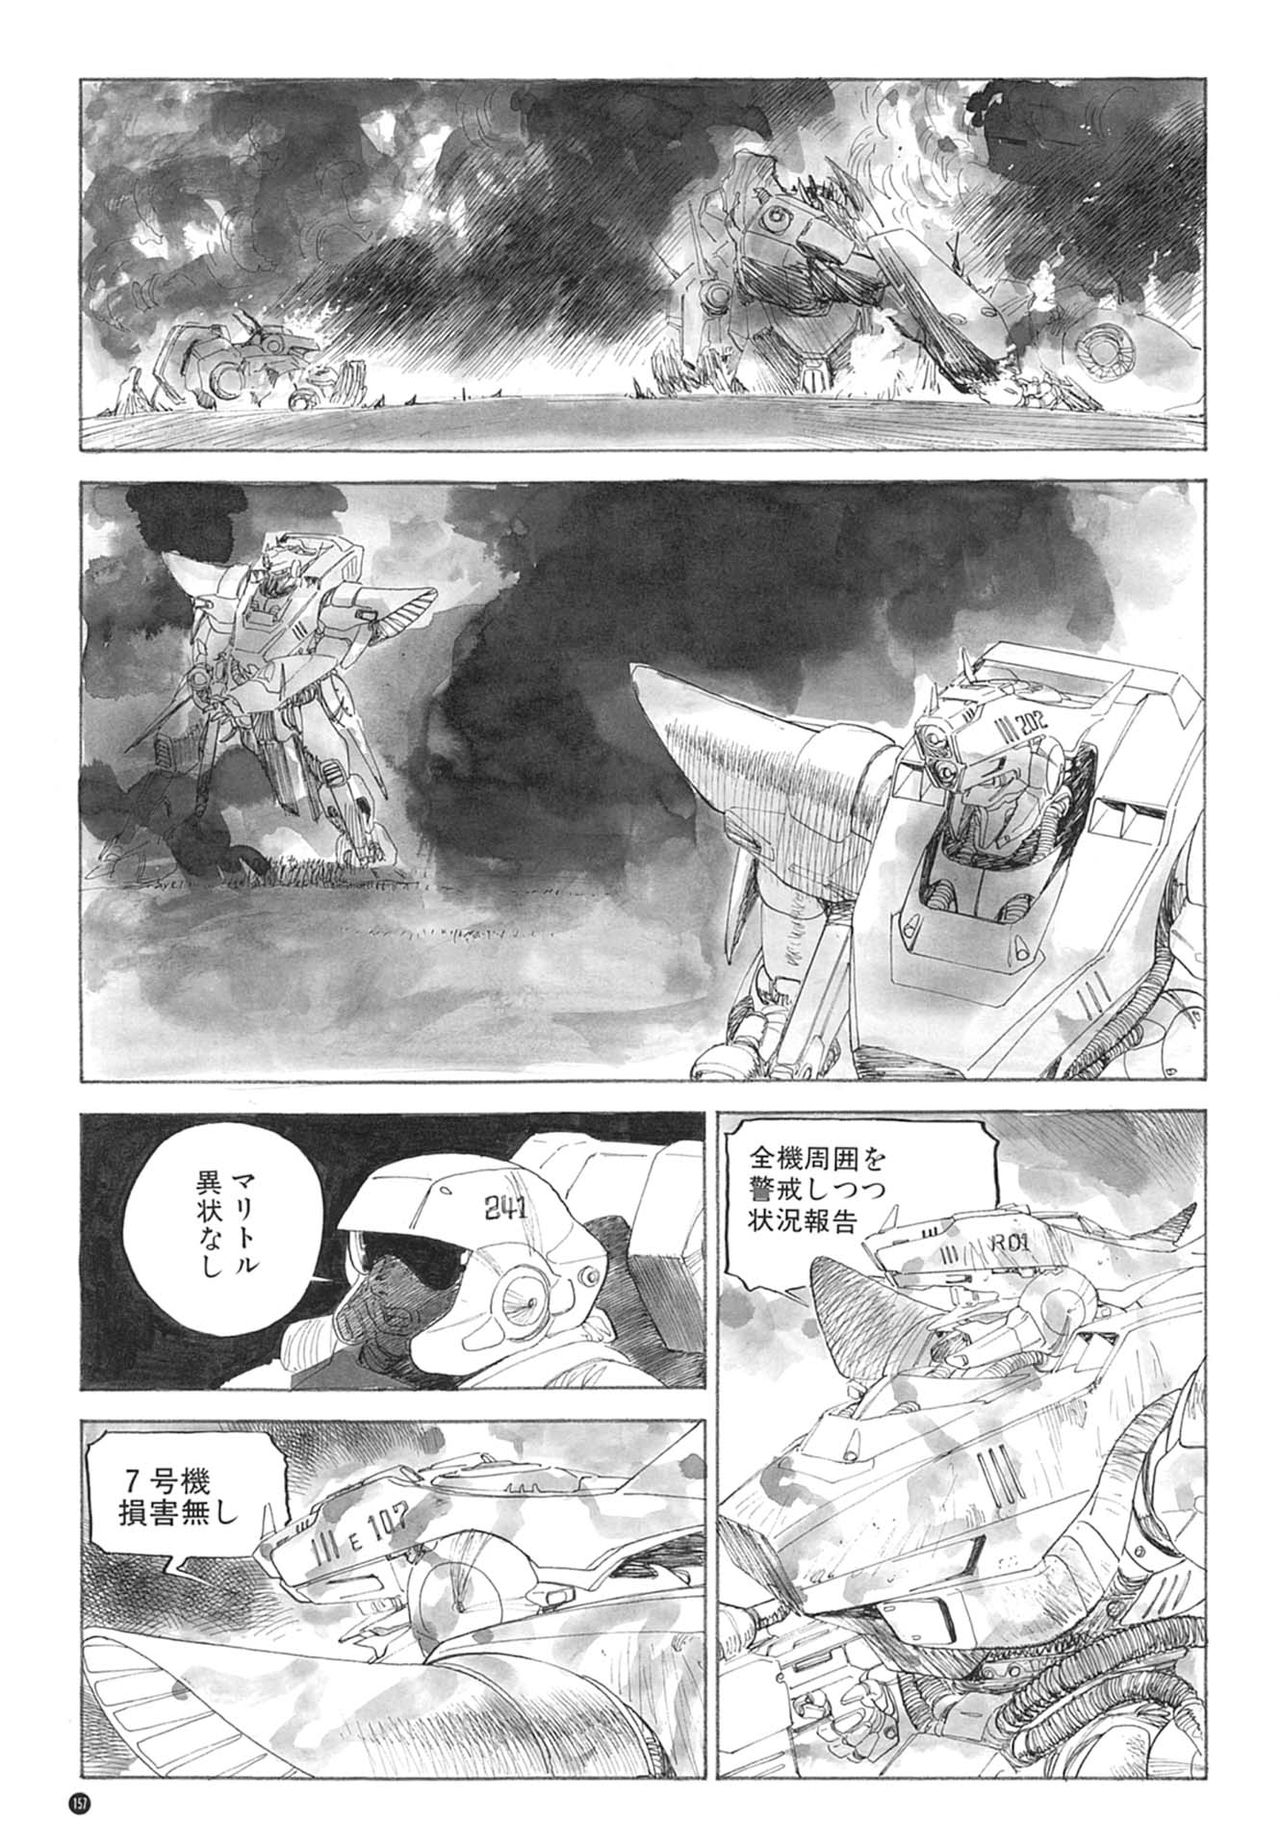 [Kazuhisa Kondo] Kazuhisa Kondo 2D & 3D Works - Go Ahead - From Mobile Suit Gundam to Original Mechanism 156